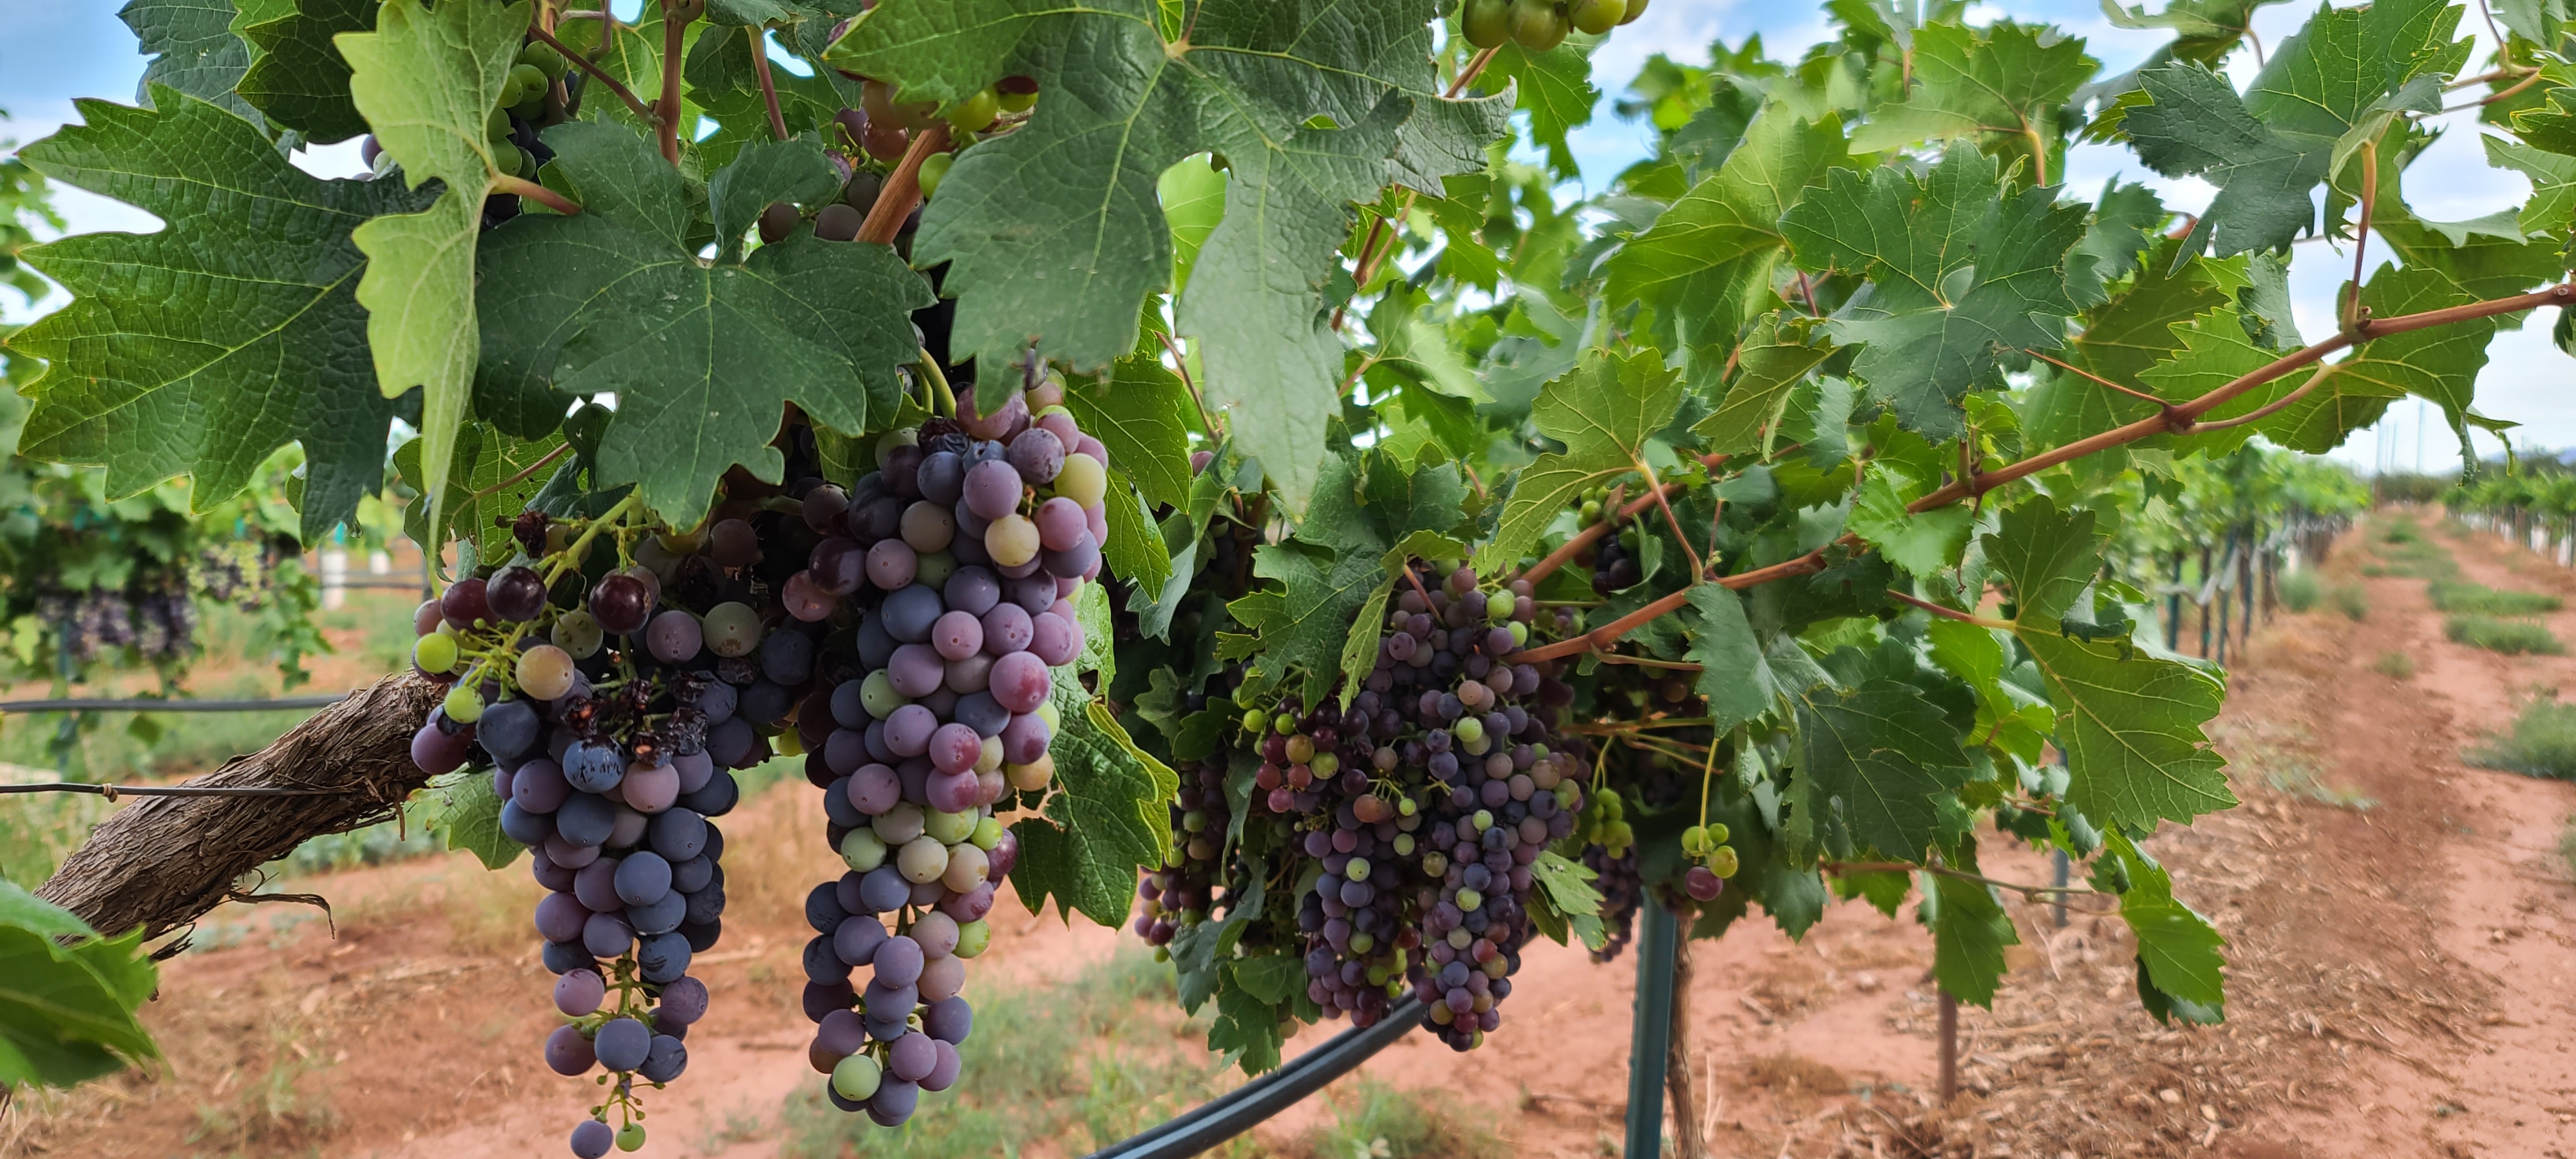 20230714-081116-grapes.jpg